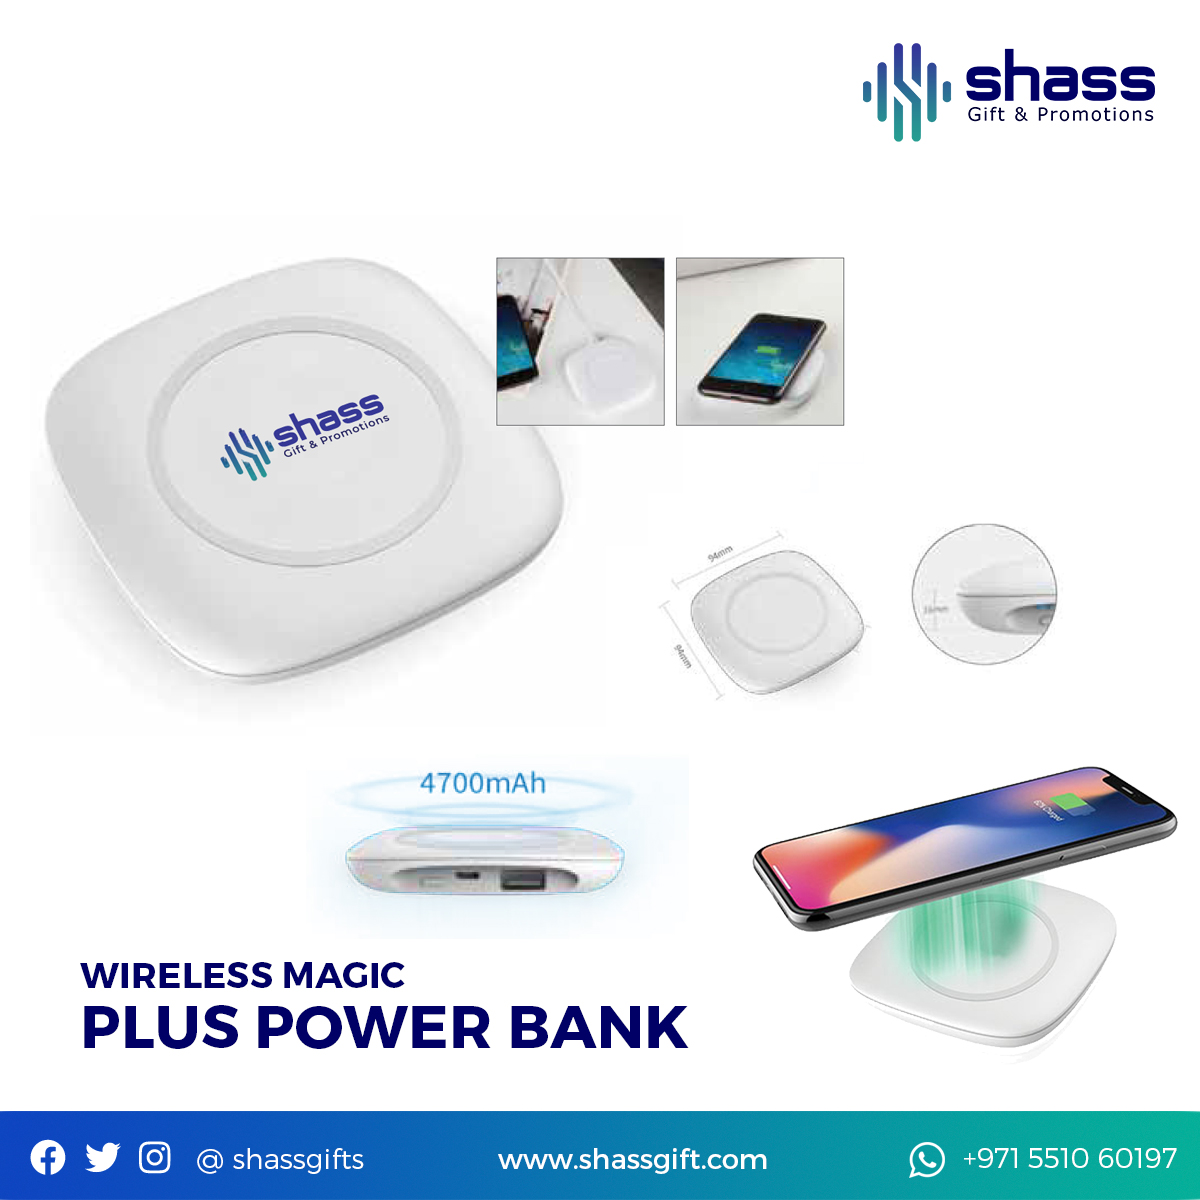 Wireless Magic Plus Power Bank